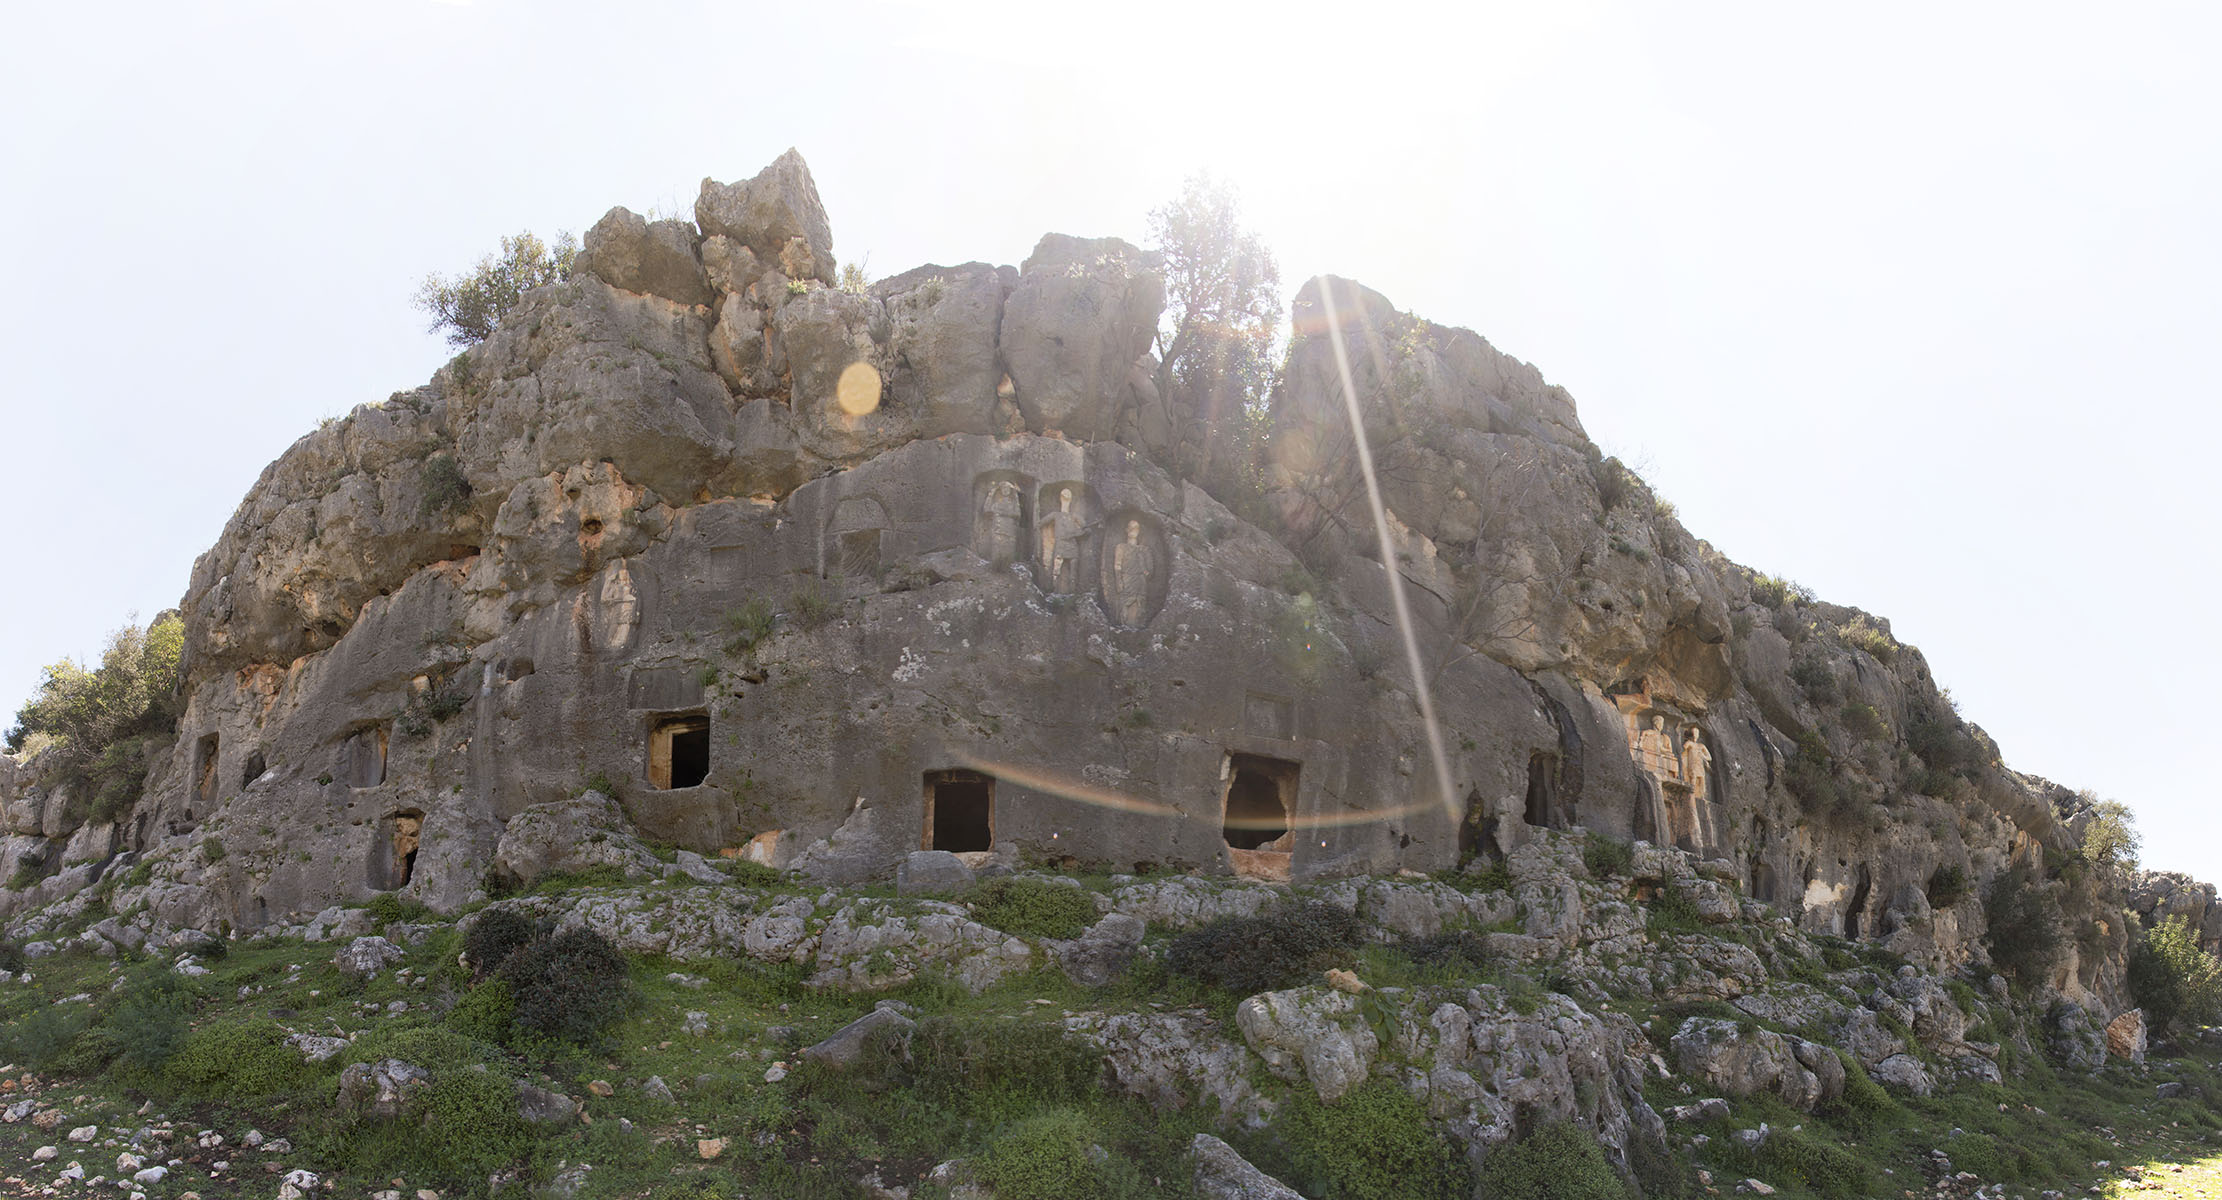 Canakci rock tombs march 2015 6789 panorama.jpg